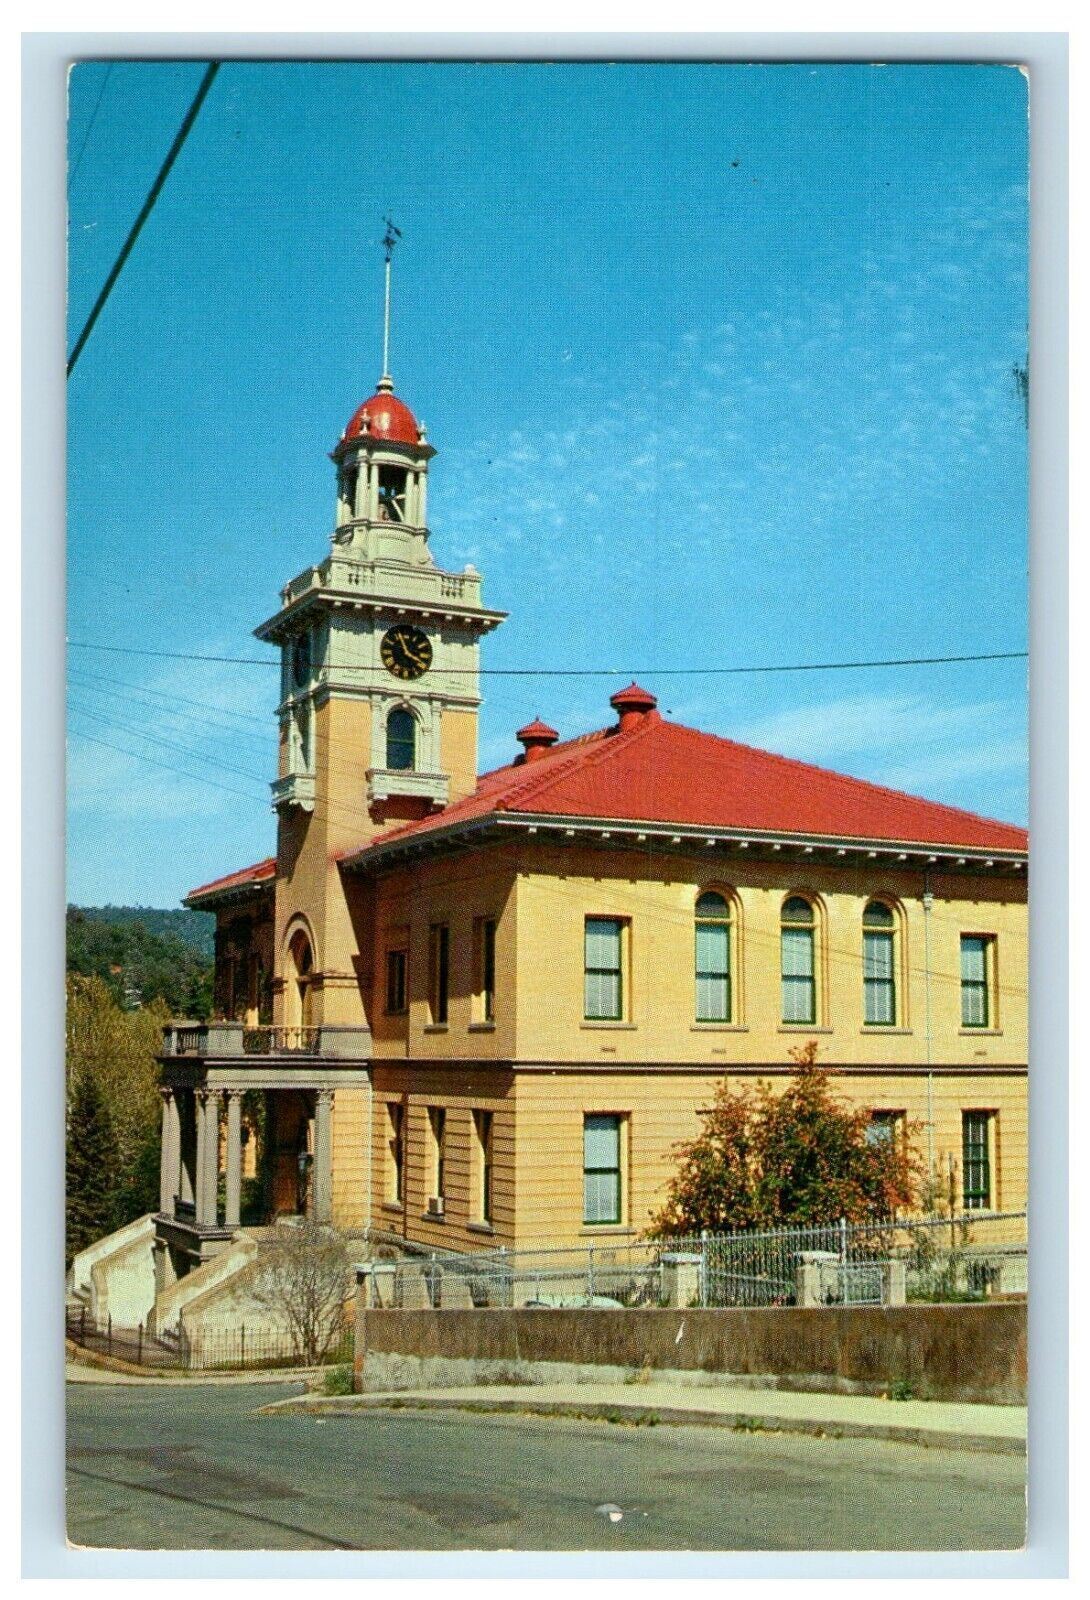 c1960 Court House Tuolumne County Building Sonora California CA Vintage Postcard